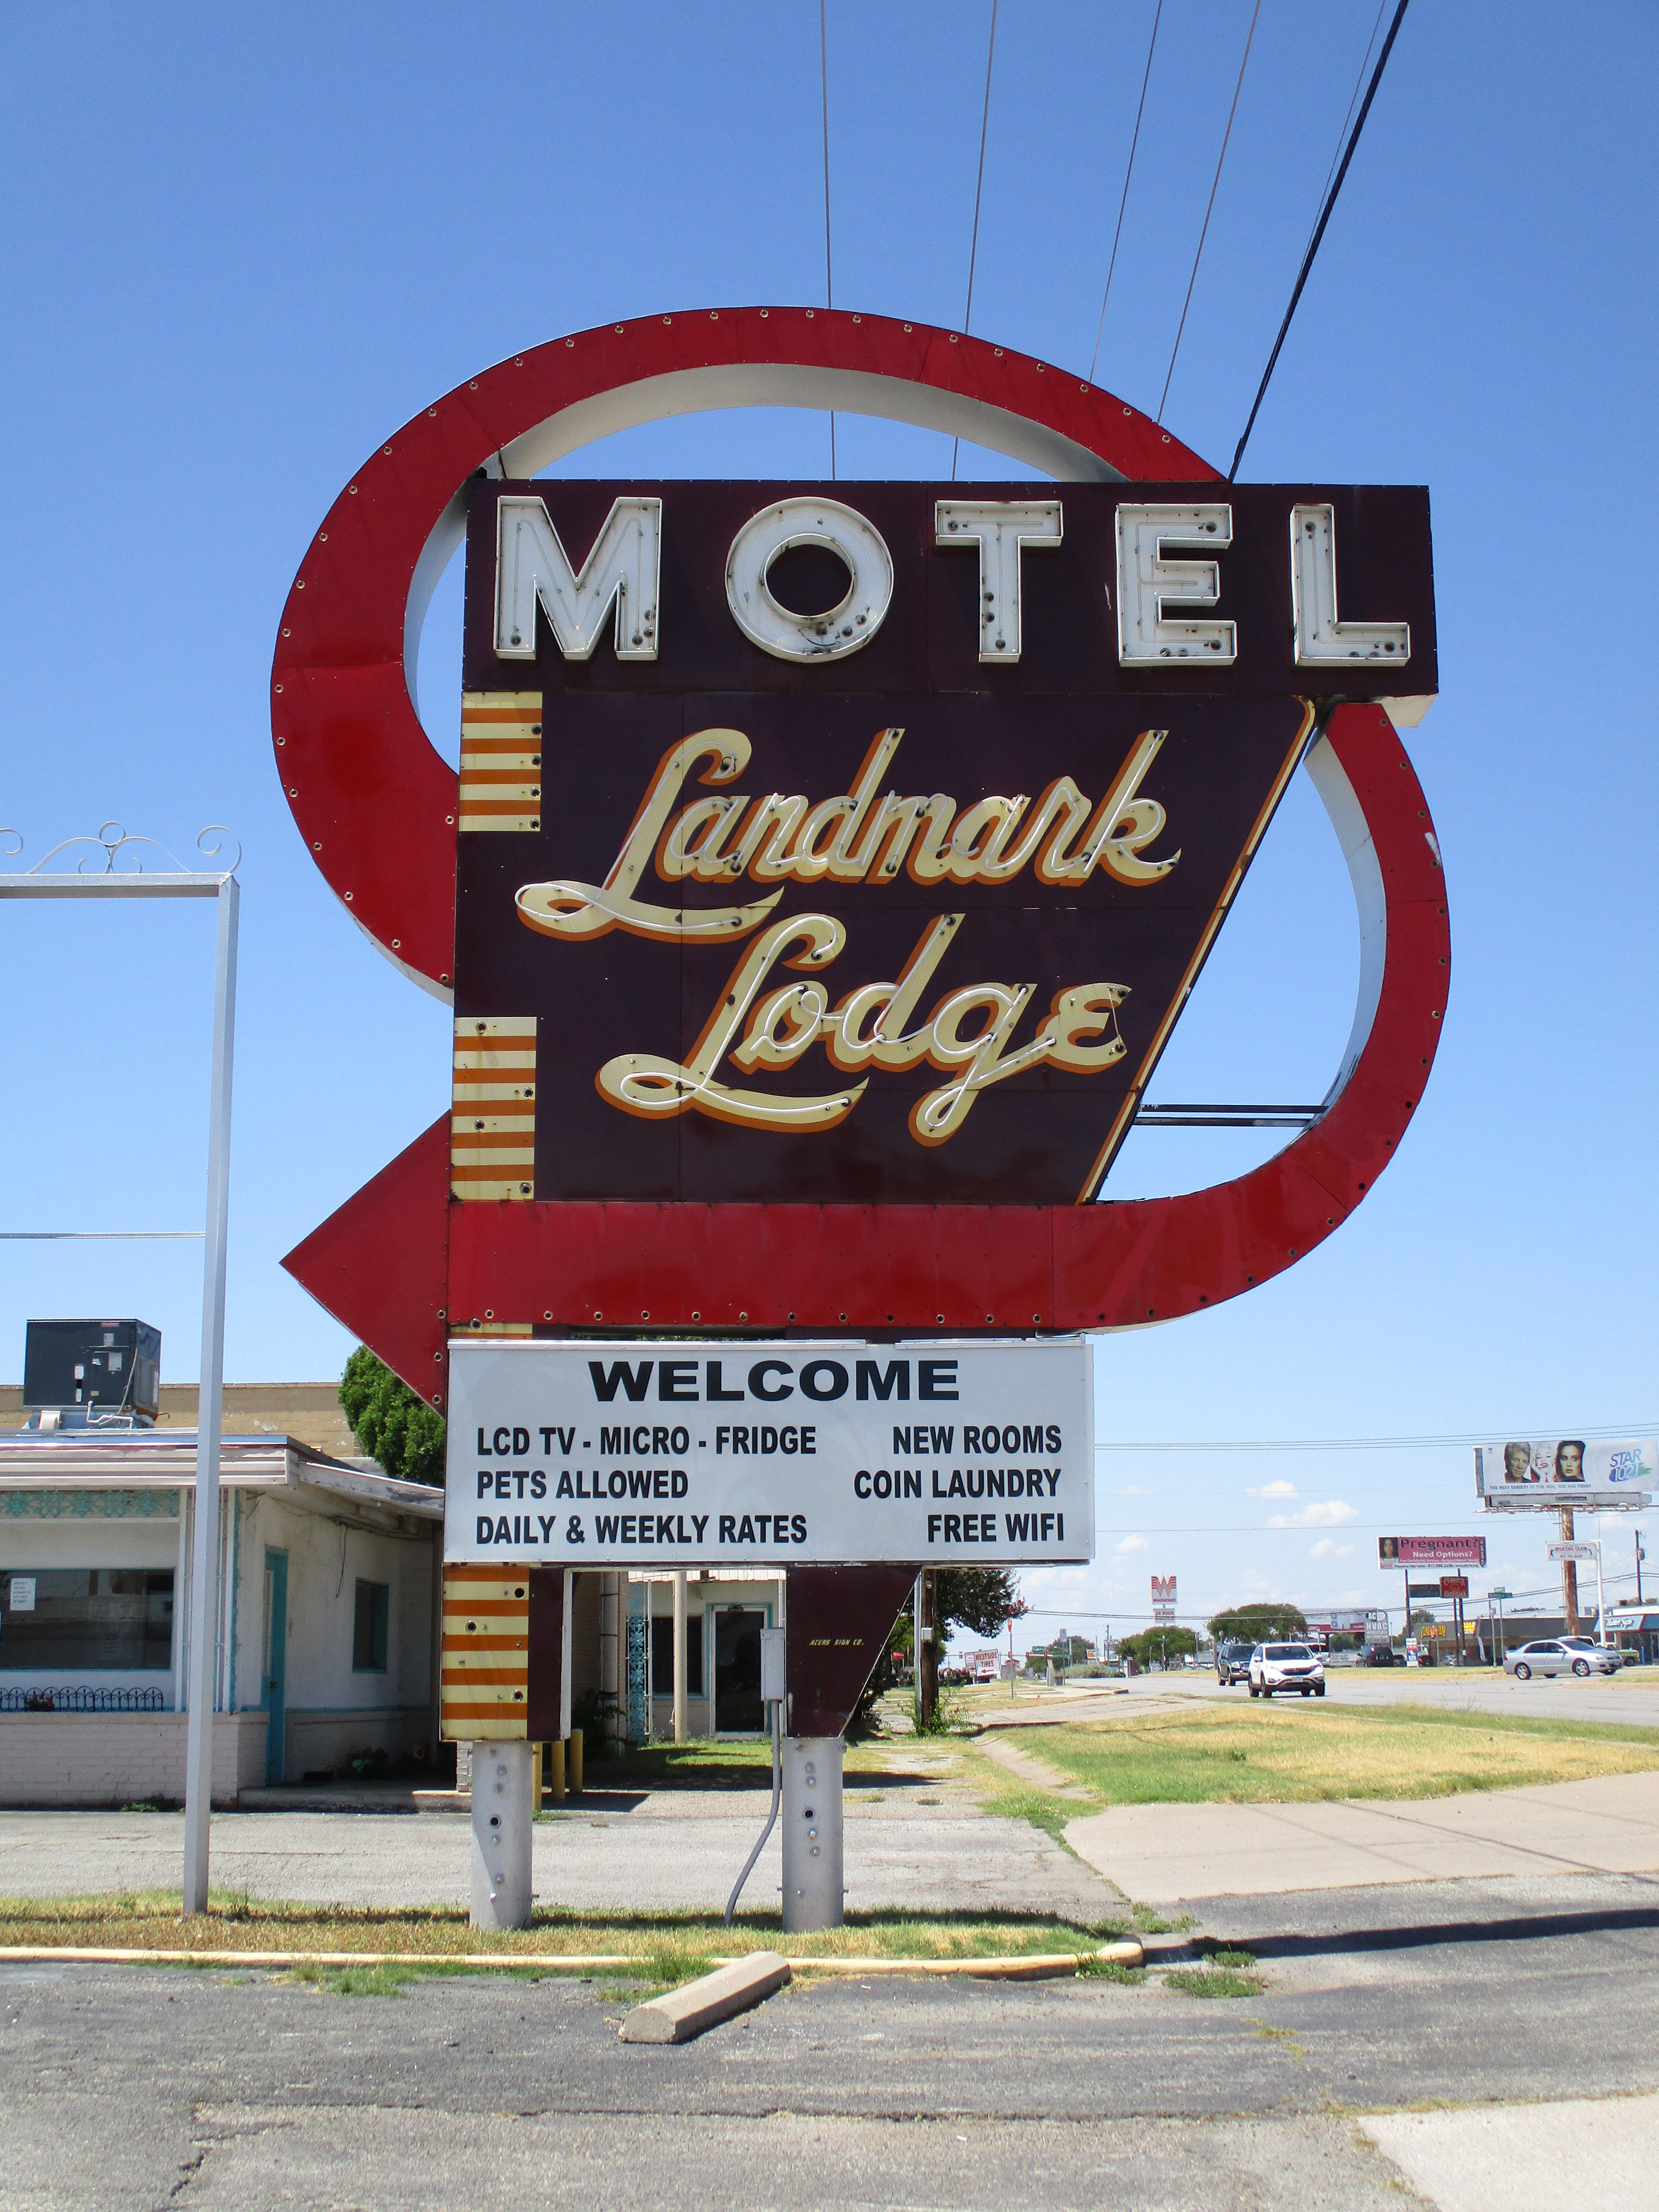 Landmark Lodge Motel - 7501 Camp Bowie West Boulevard, Fort Worth, Texas U.S.A. - August 18, 2020